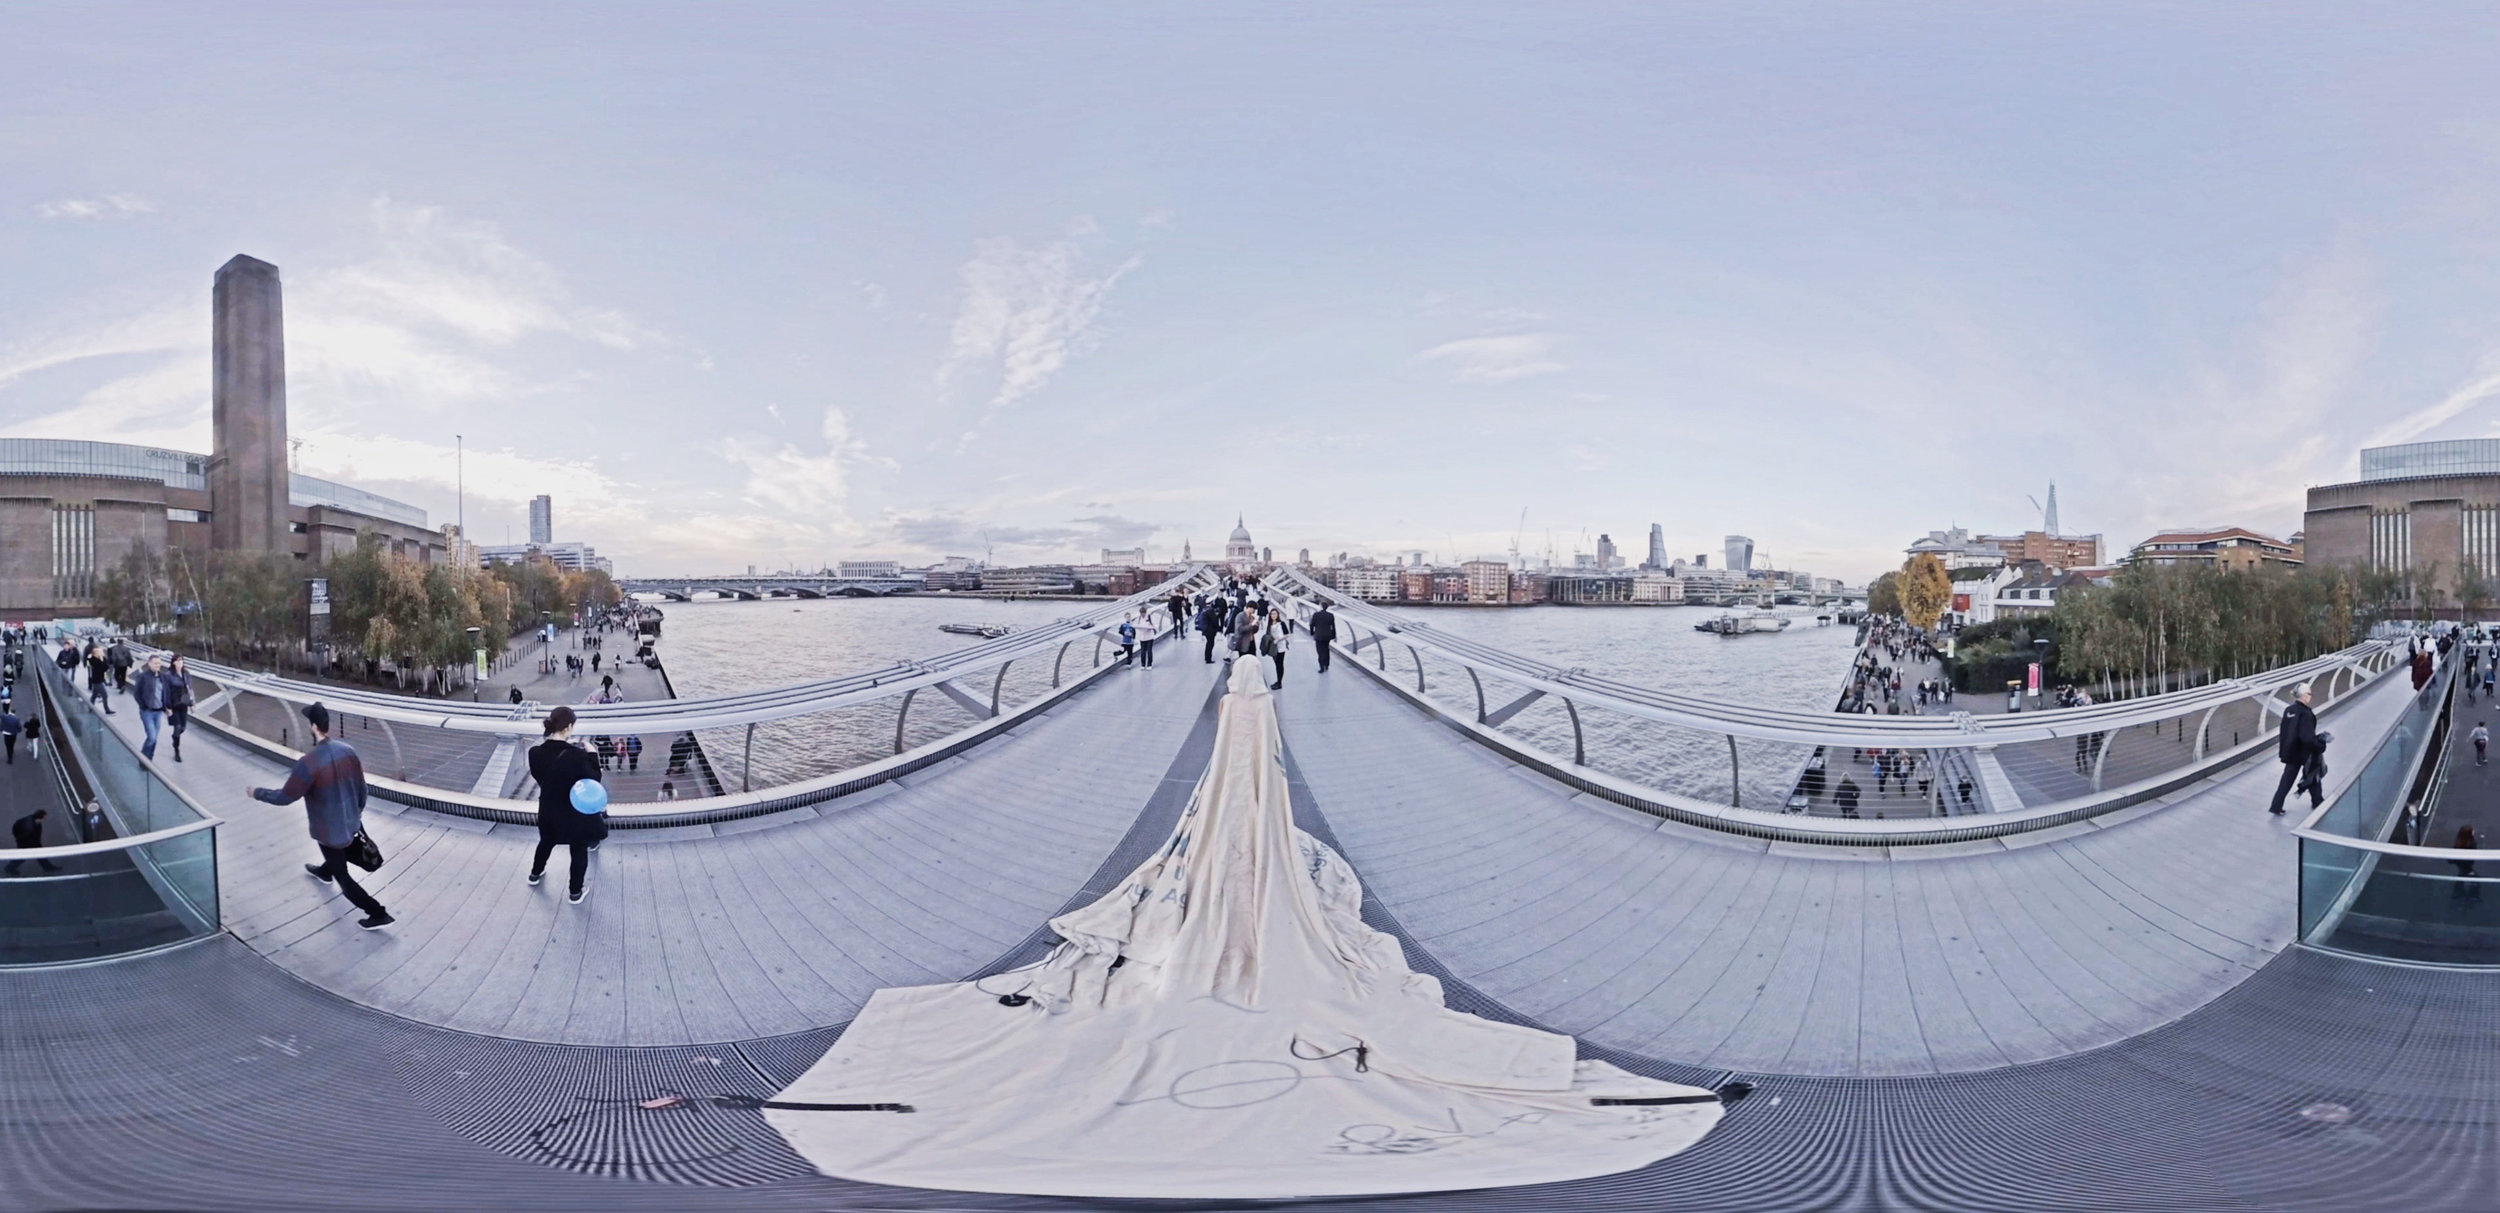  360 view the dress - Tate - St Pauls 